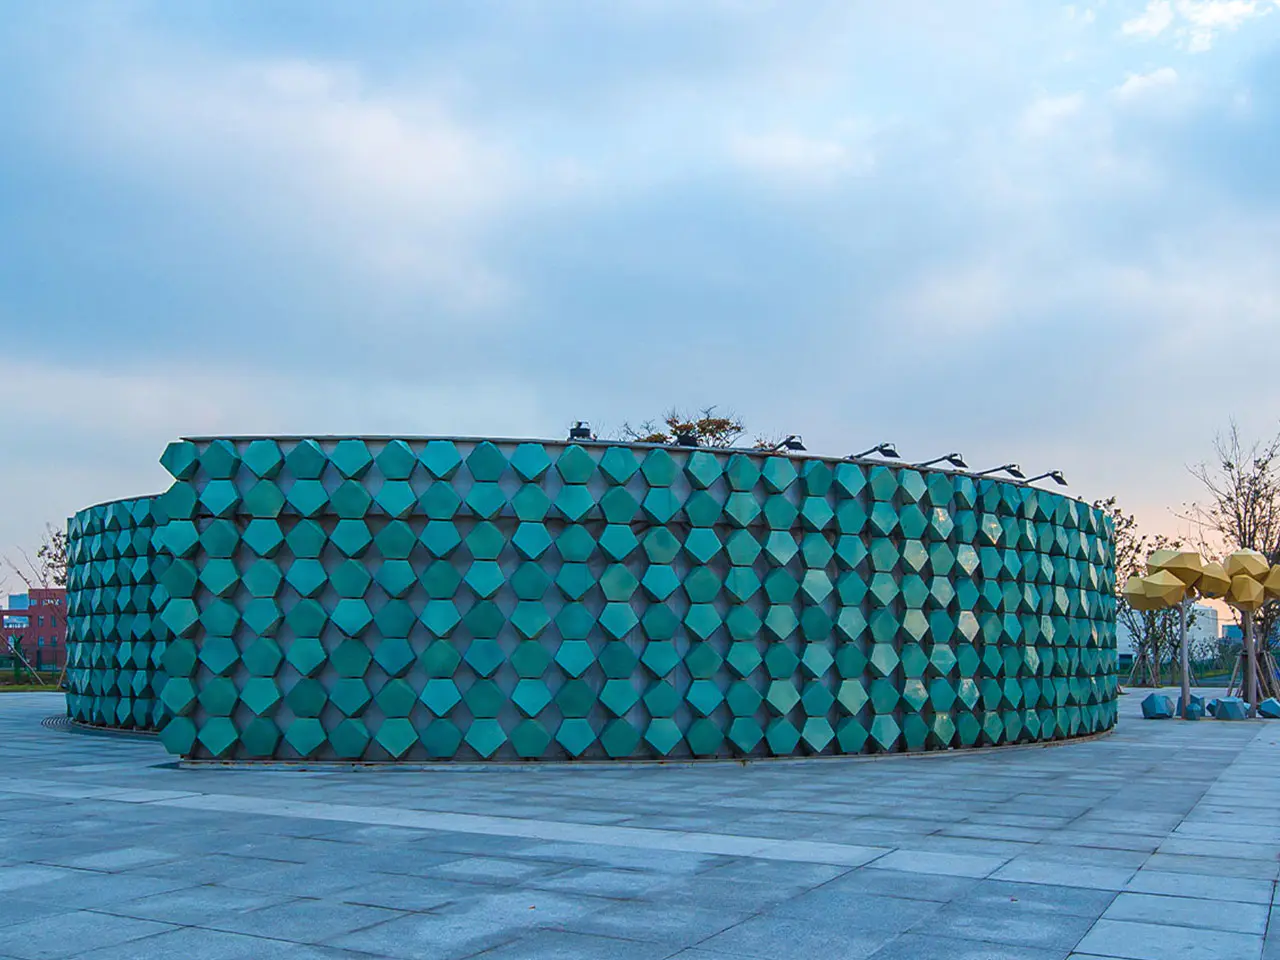 Pabellón de Cerámica de la Bienal Xuhui Riverside, Shanghai, China